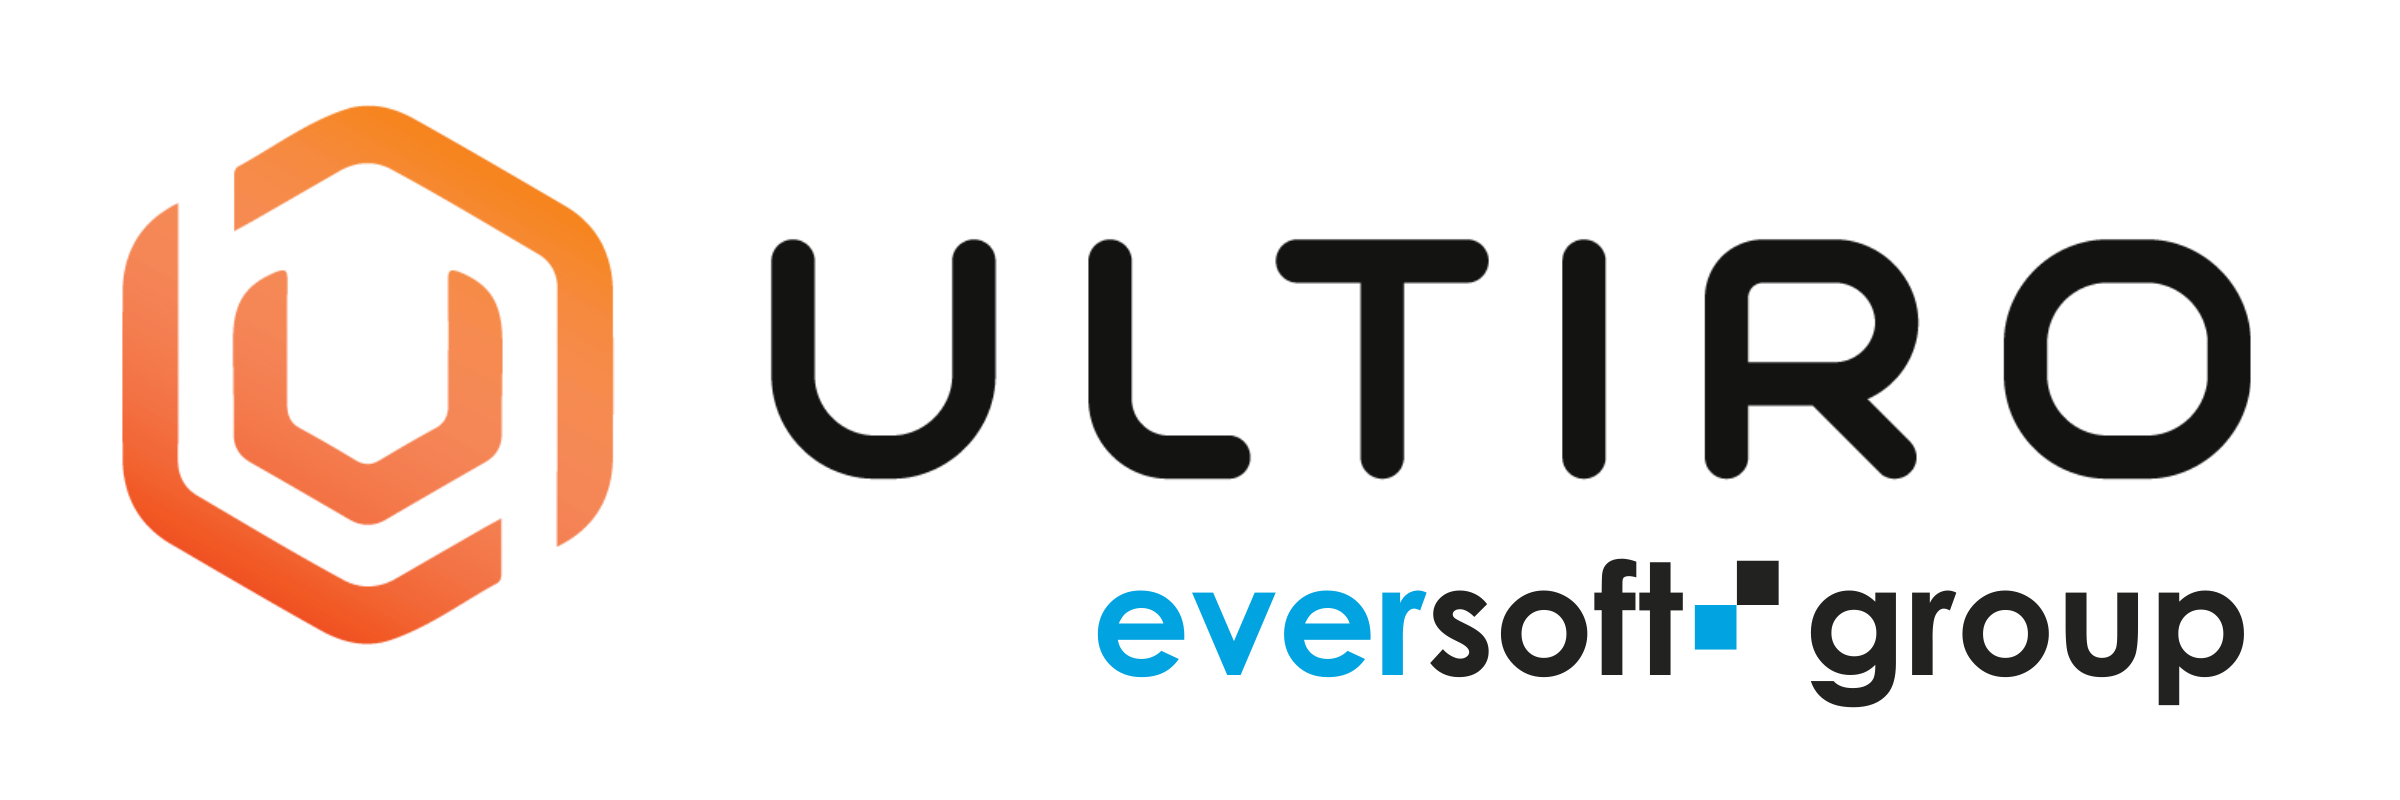 logo ultiro with eversoft group ORYGINAL - big